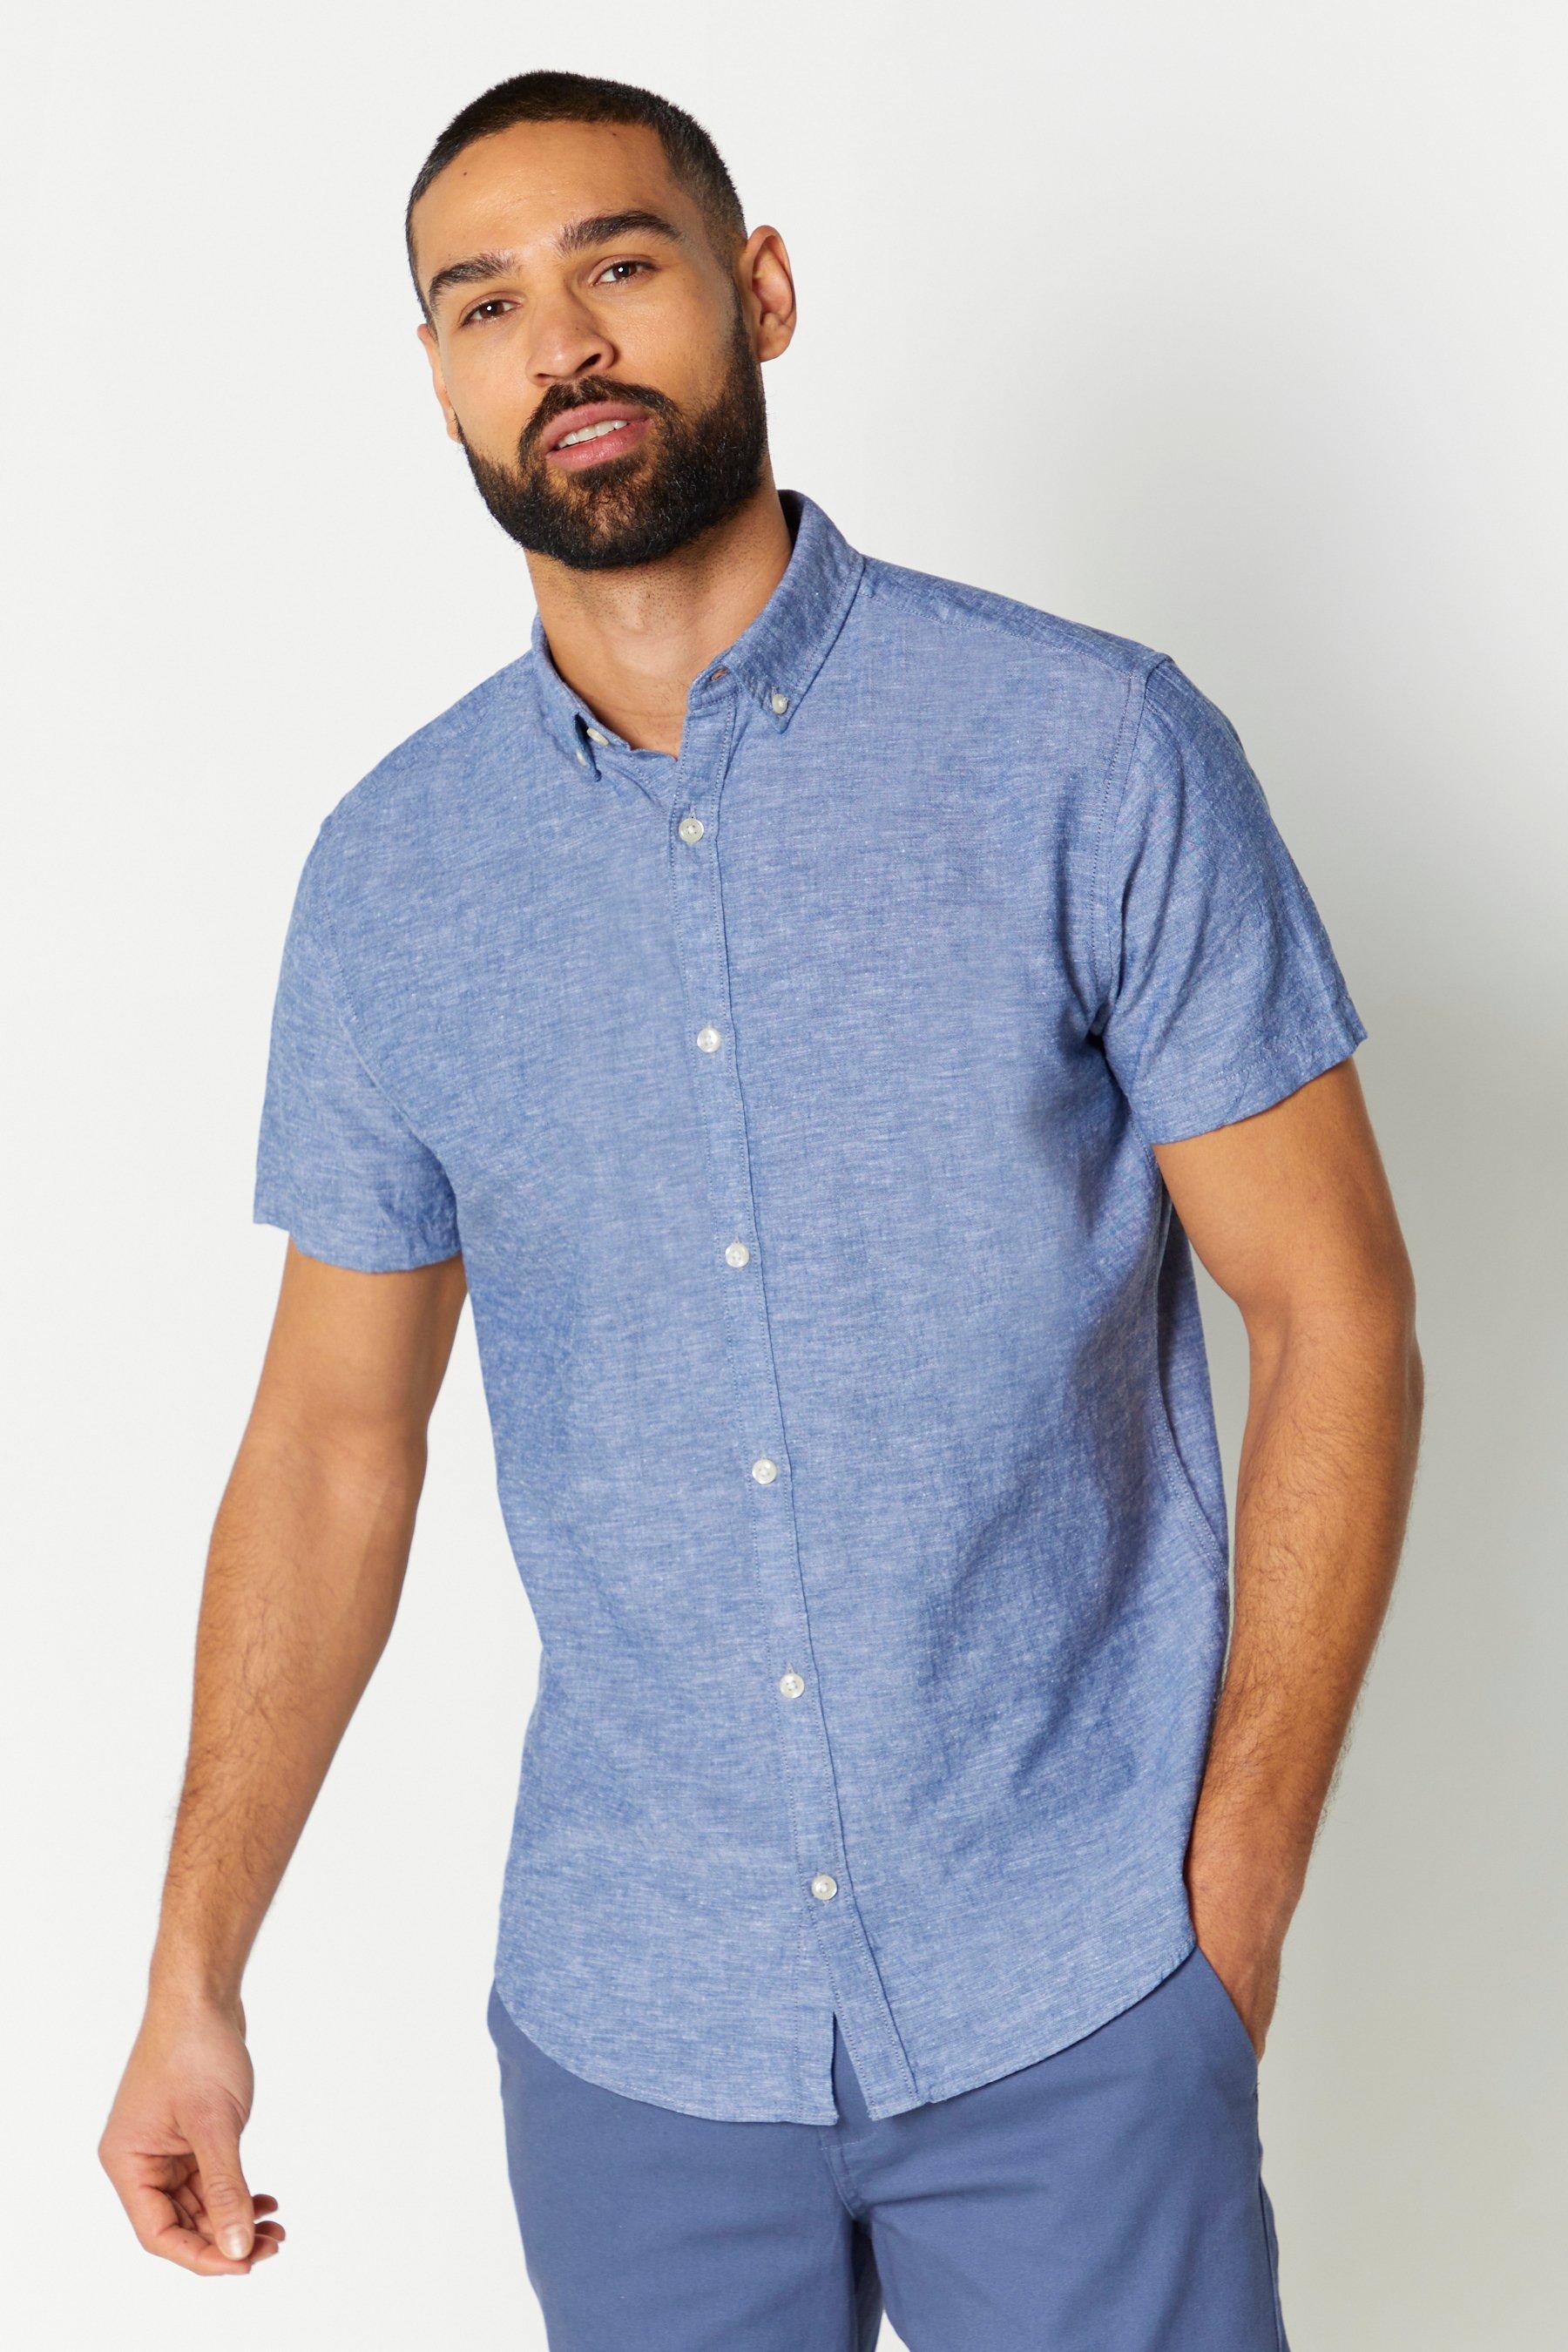 jack and jones summer shirt faded denim - mens - blue - size: small